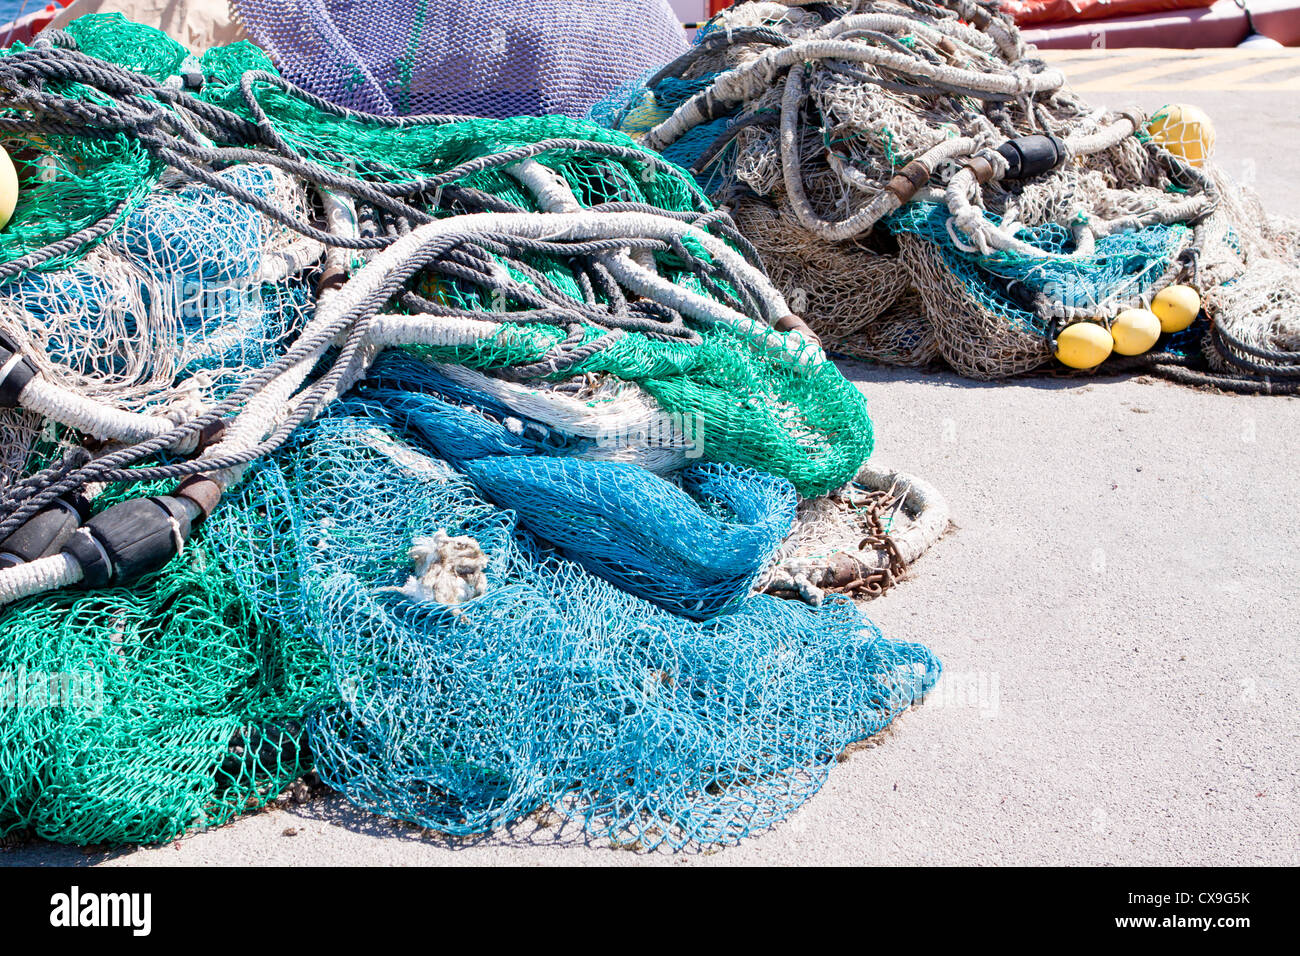 Bunch of Trawl Fishing Net on Boat Stock Photo - Image of summer, fishnet:  160576570